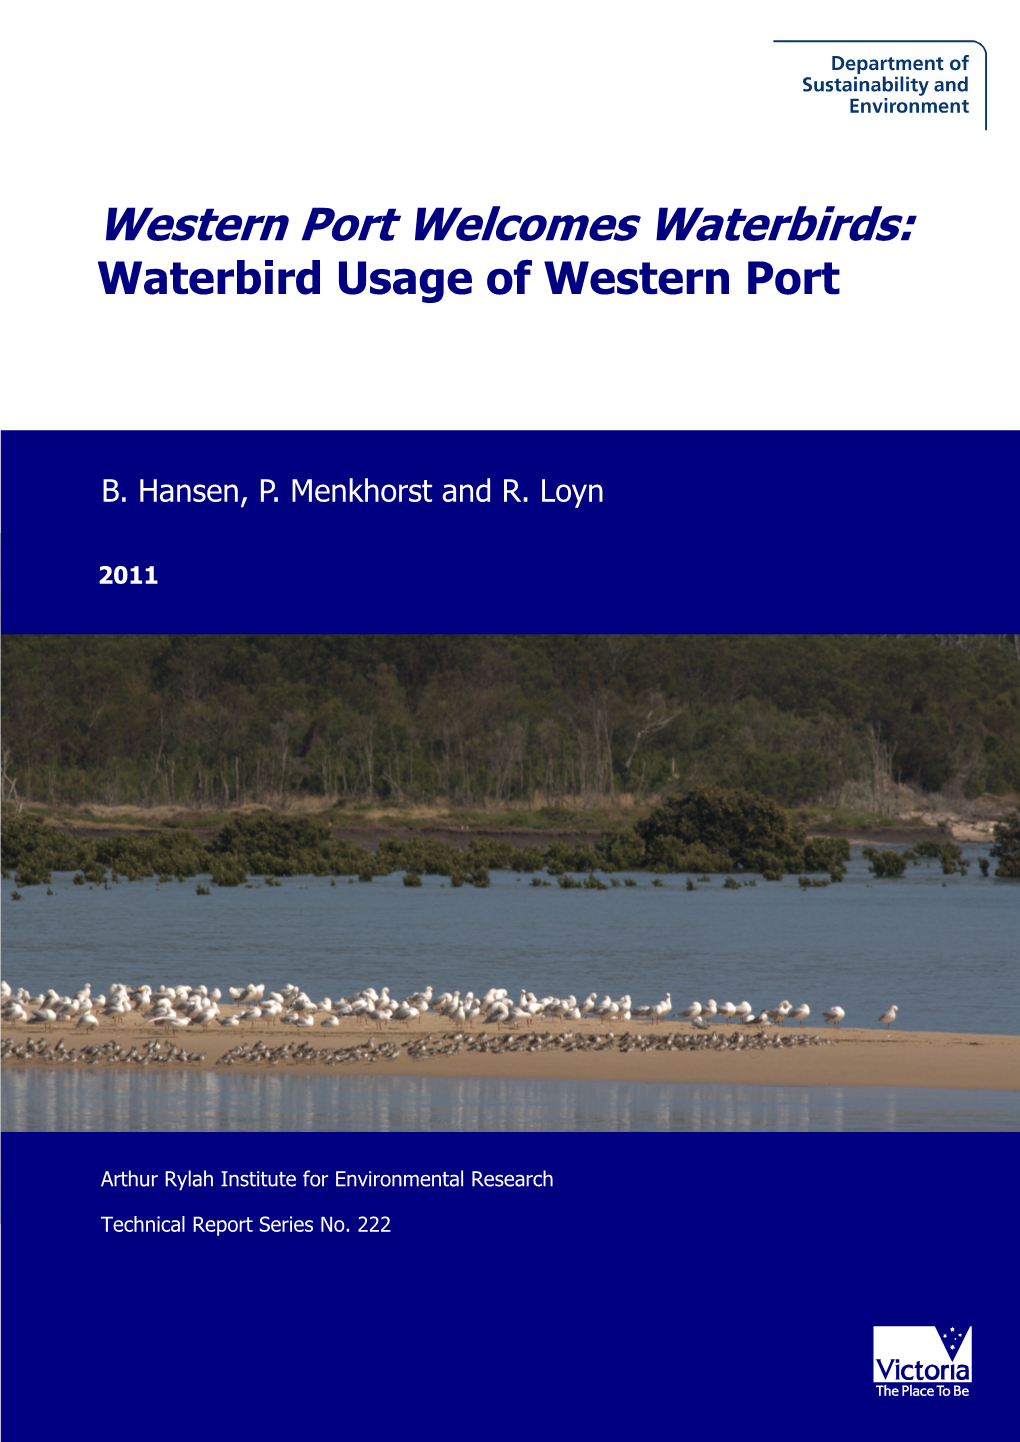 Western Port Welcomes Waterbirds: Waterbird Usage of Western Port